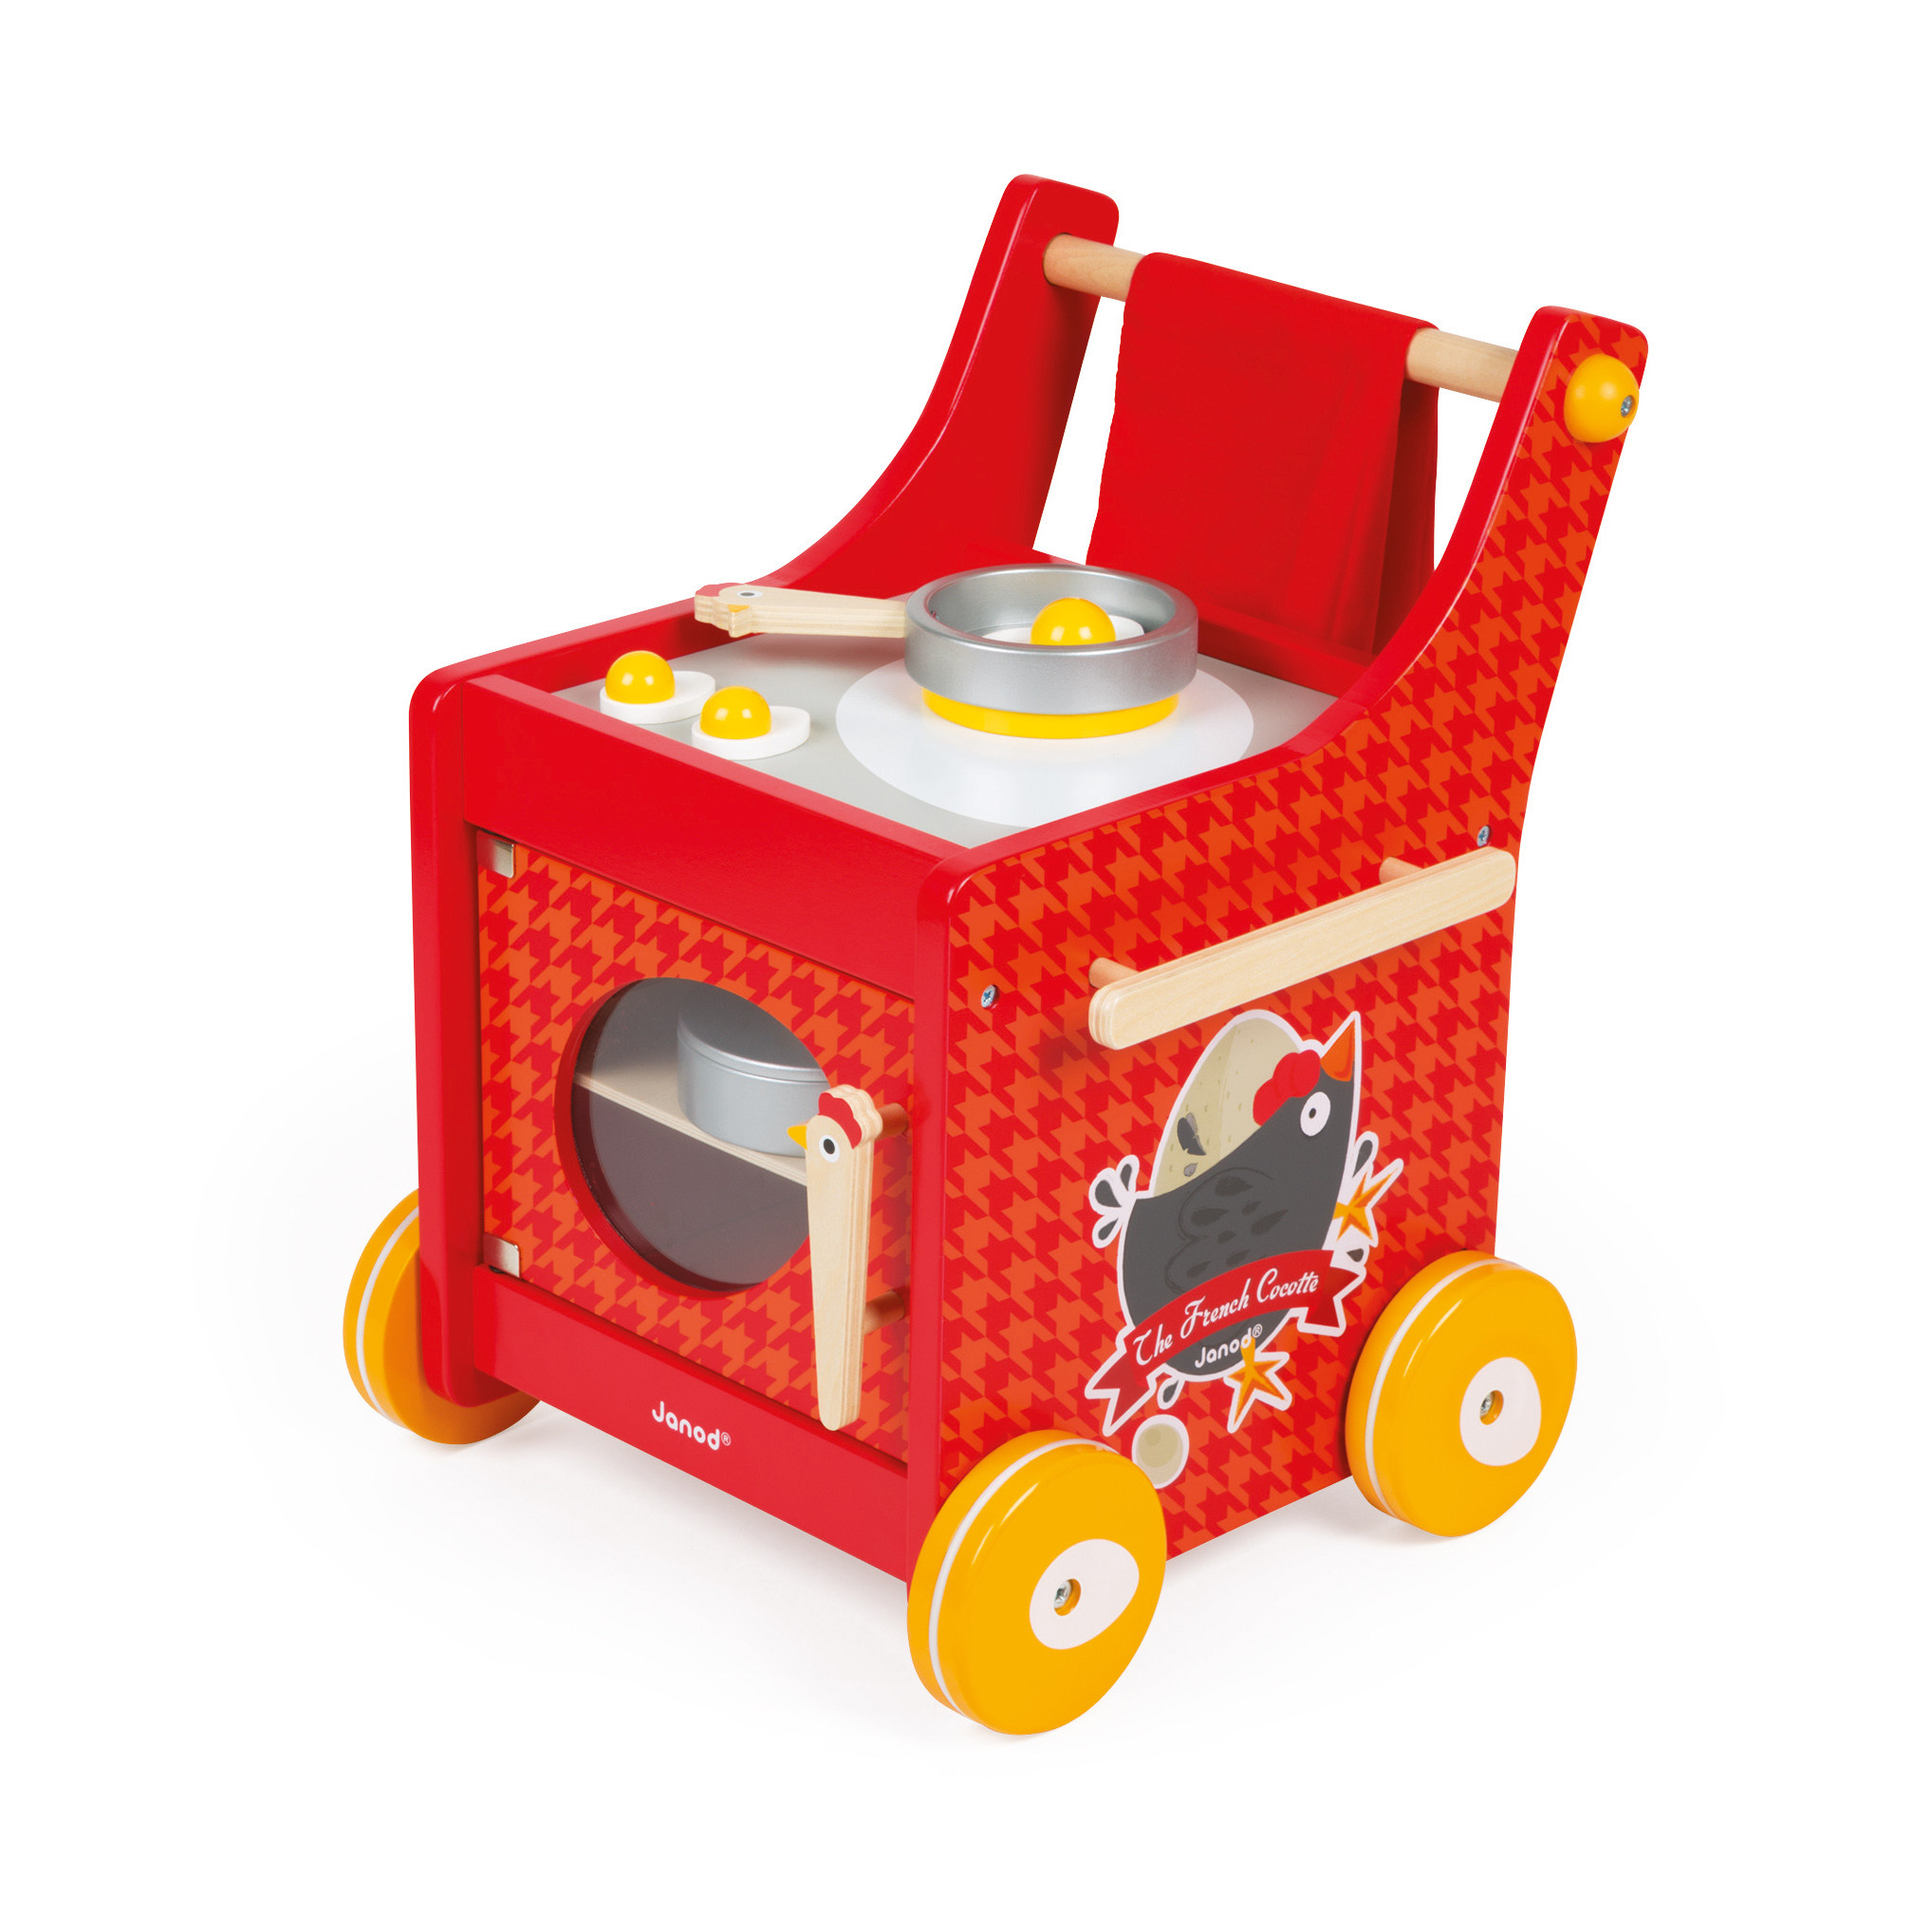 Juratoys Recalls Toy Trolleys Due to Impact Injury Hazard